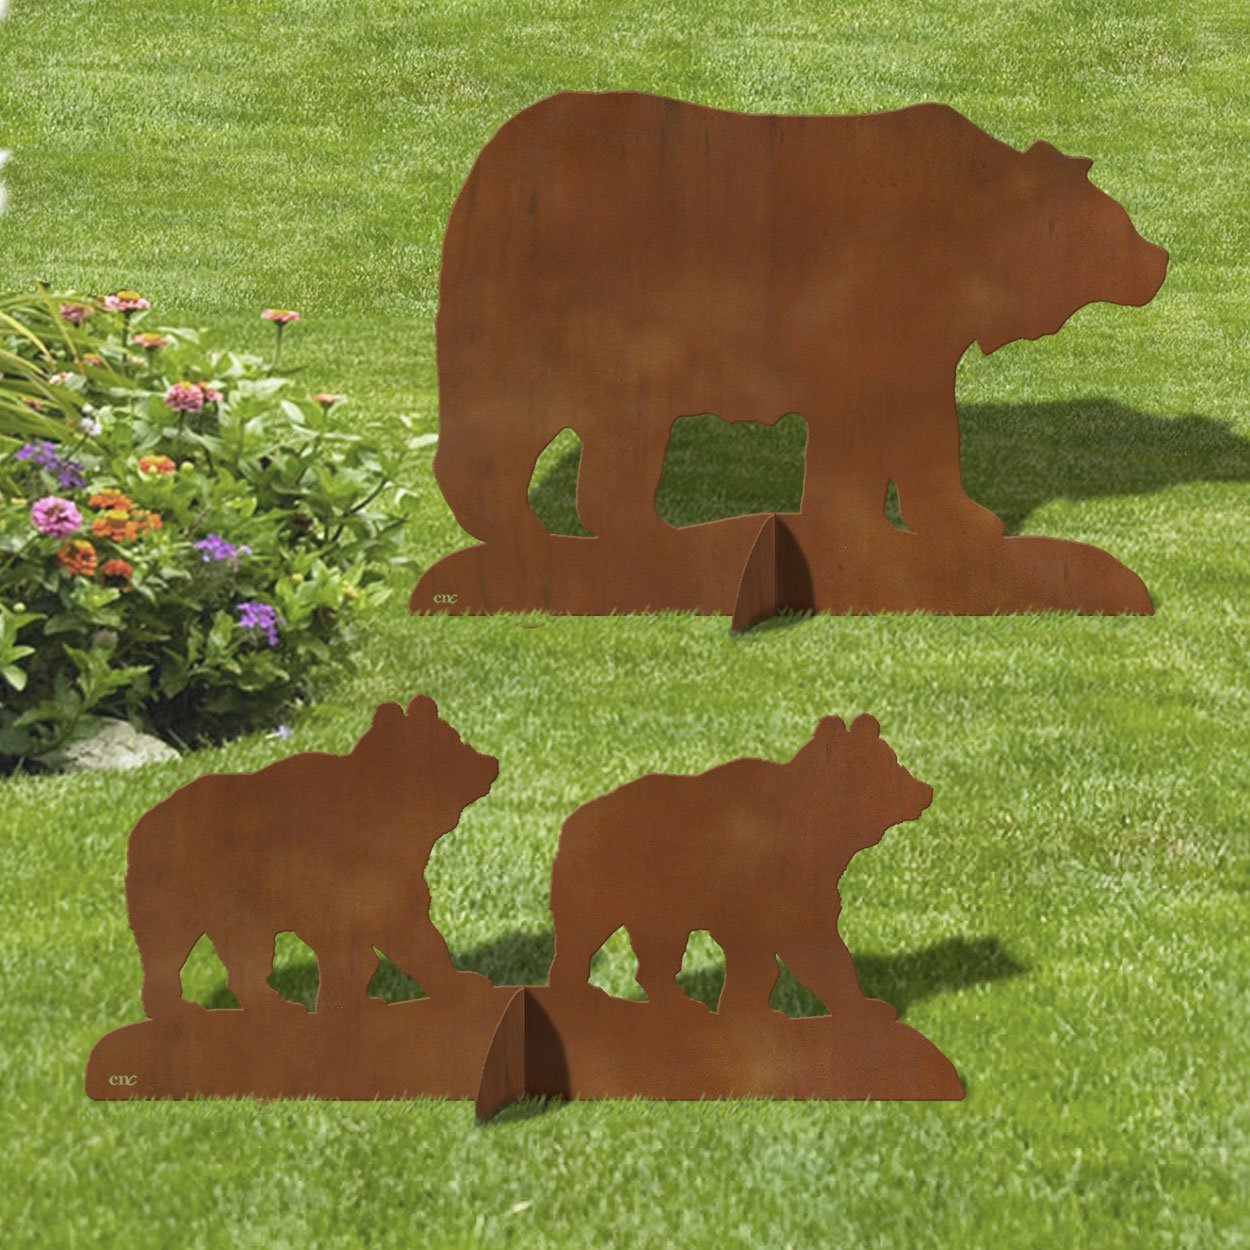 603044 - Two-Piece Bear and Cubs Metal Garden Statue Yard Art